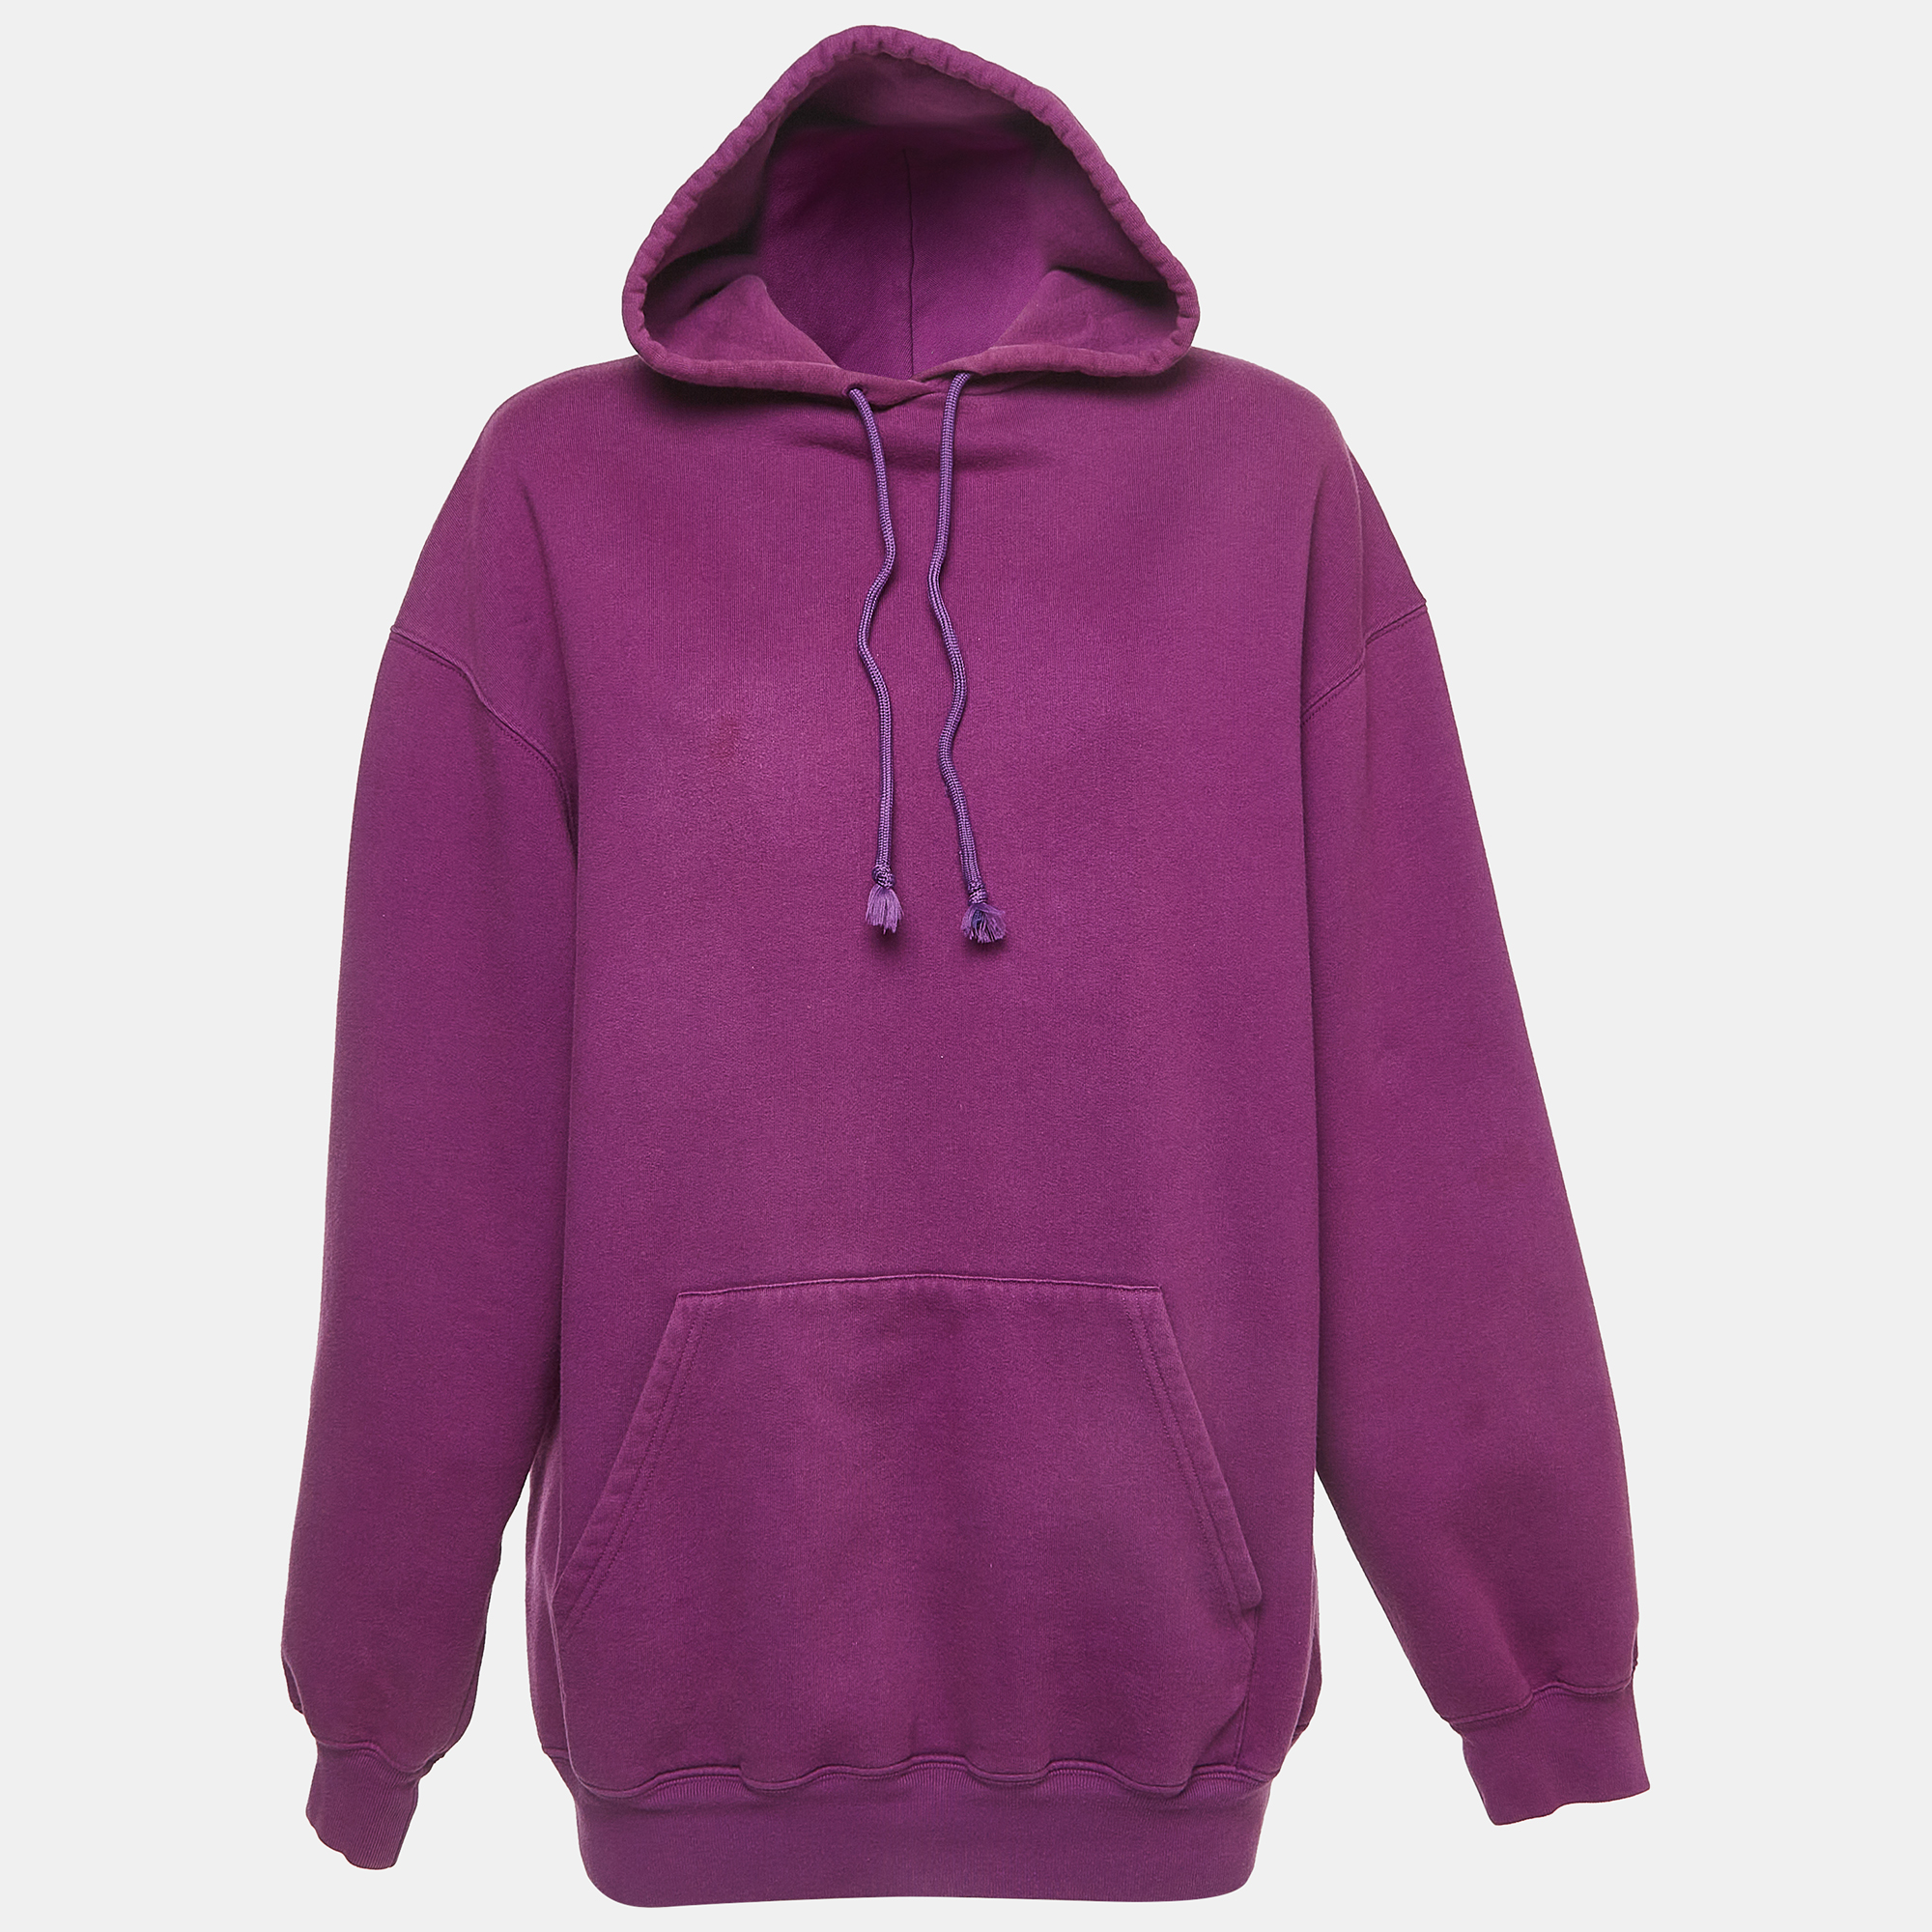 Balenciaga Purple Logo Print Cotton Blend Hooded Sweatshirt S